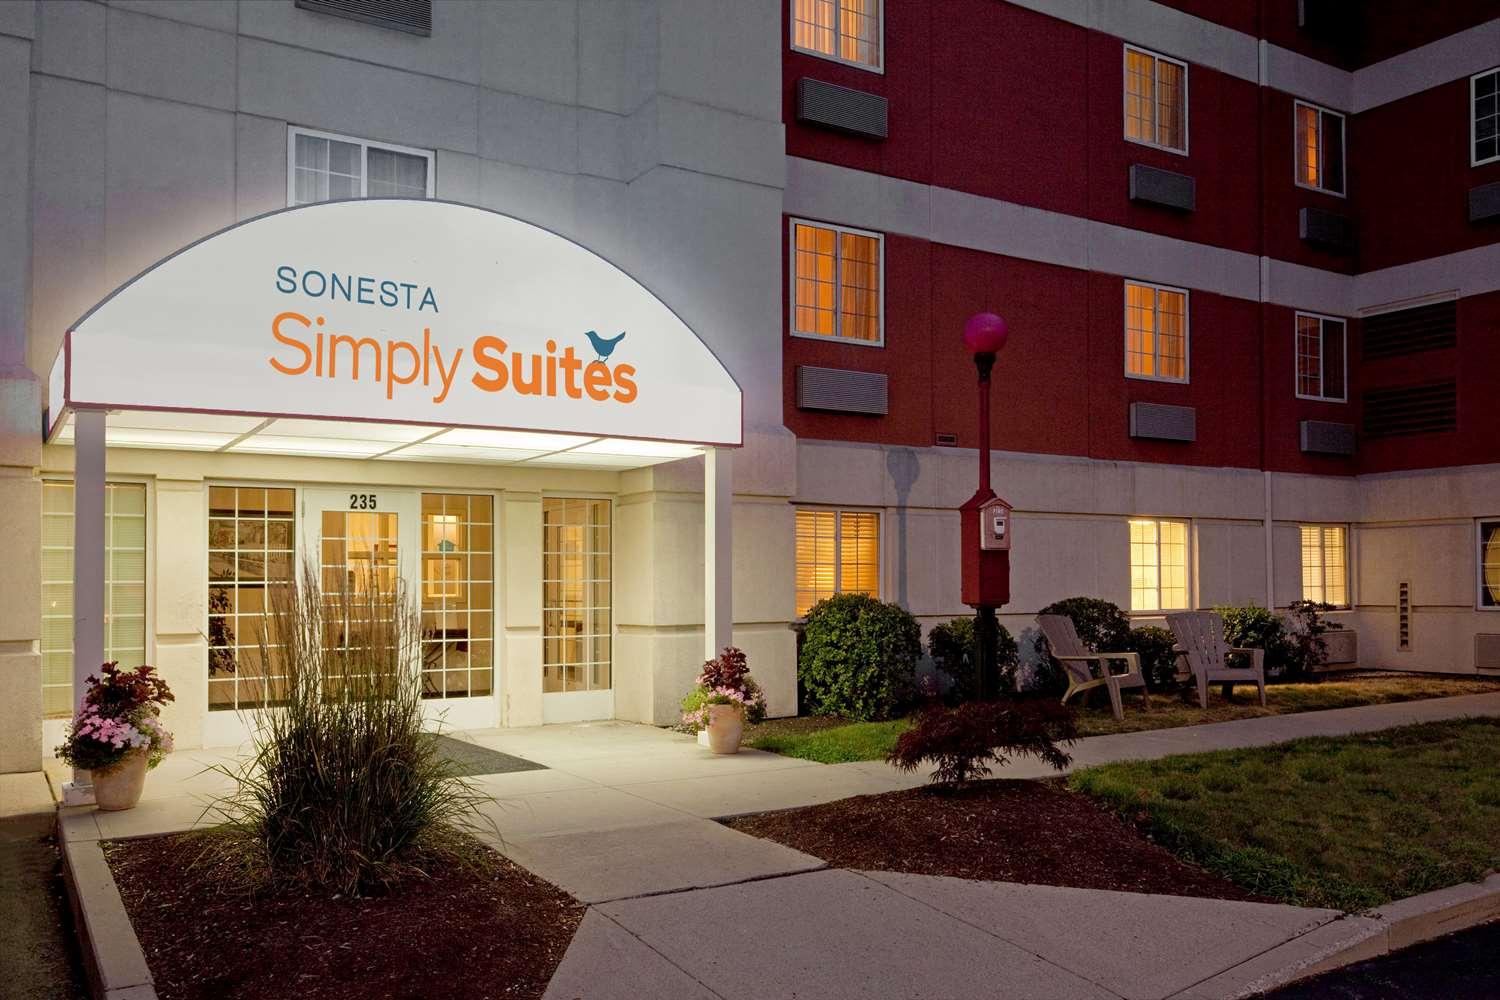 Sonesta Simply Suites Boston Braintree in Quincy, MA